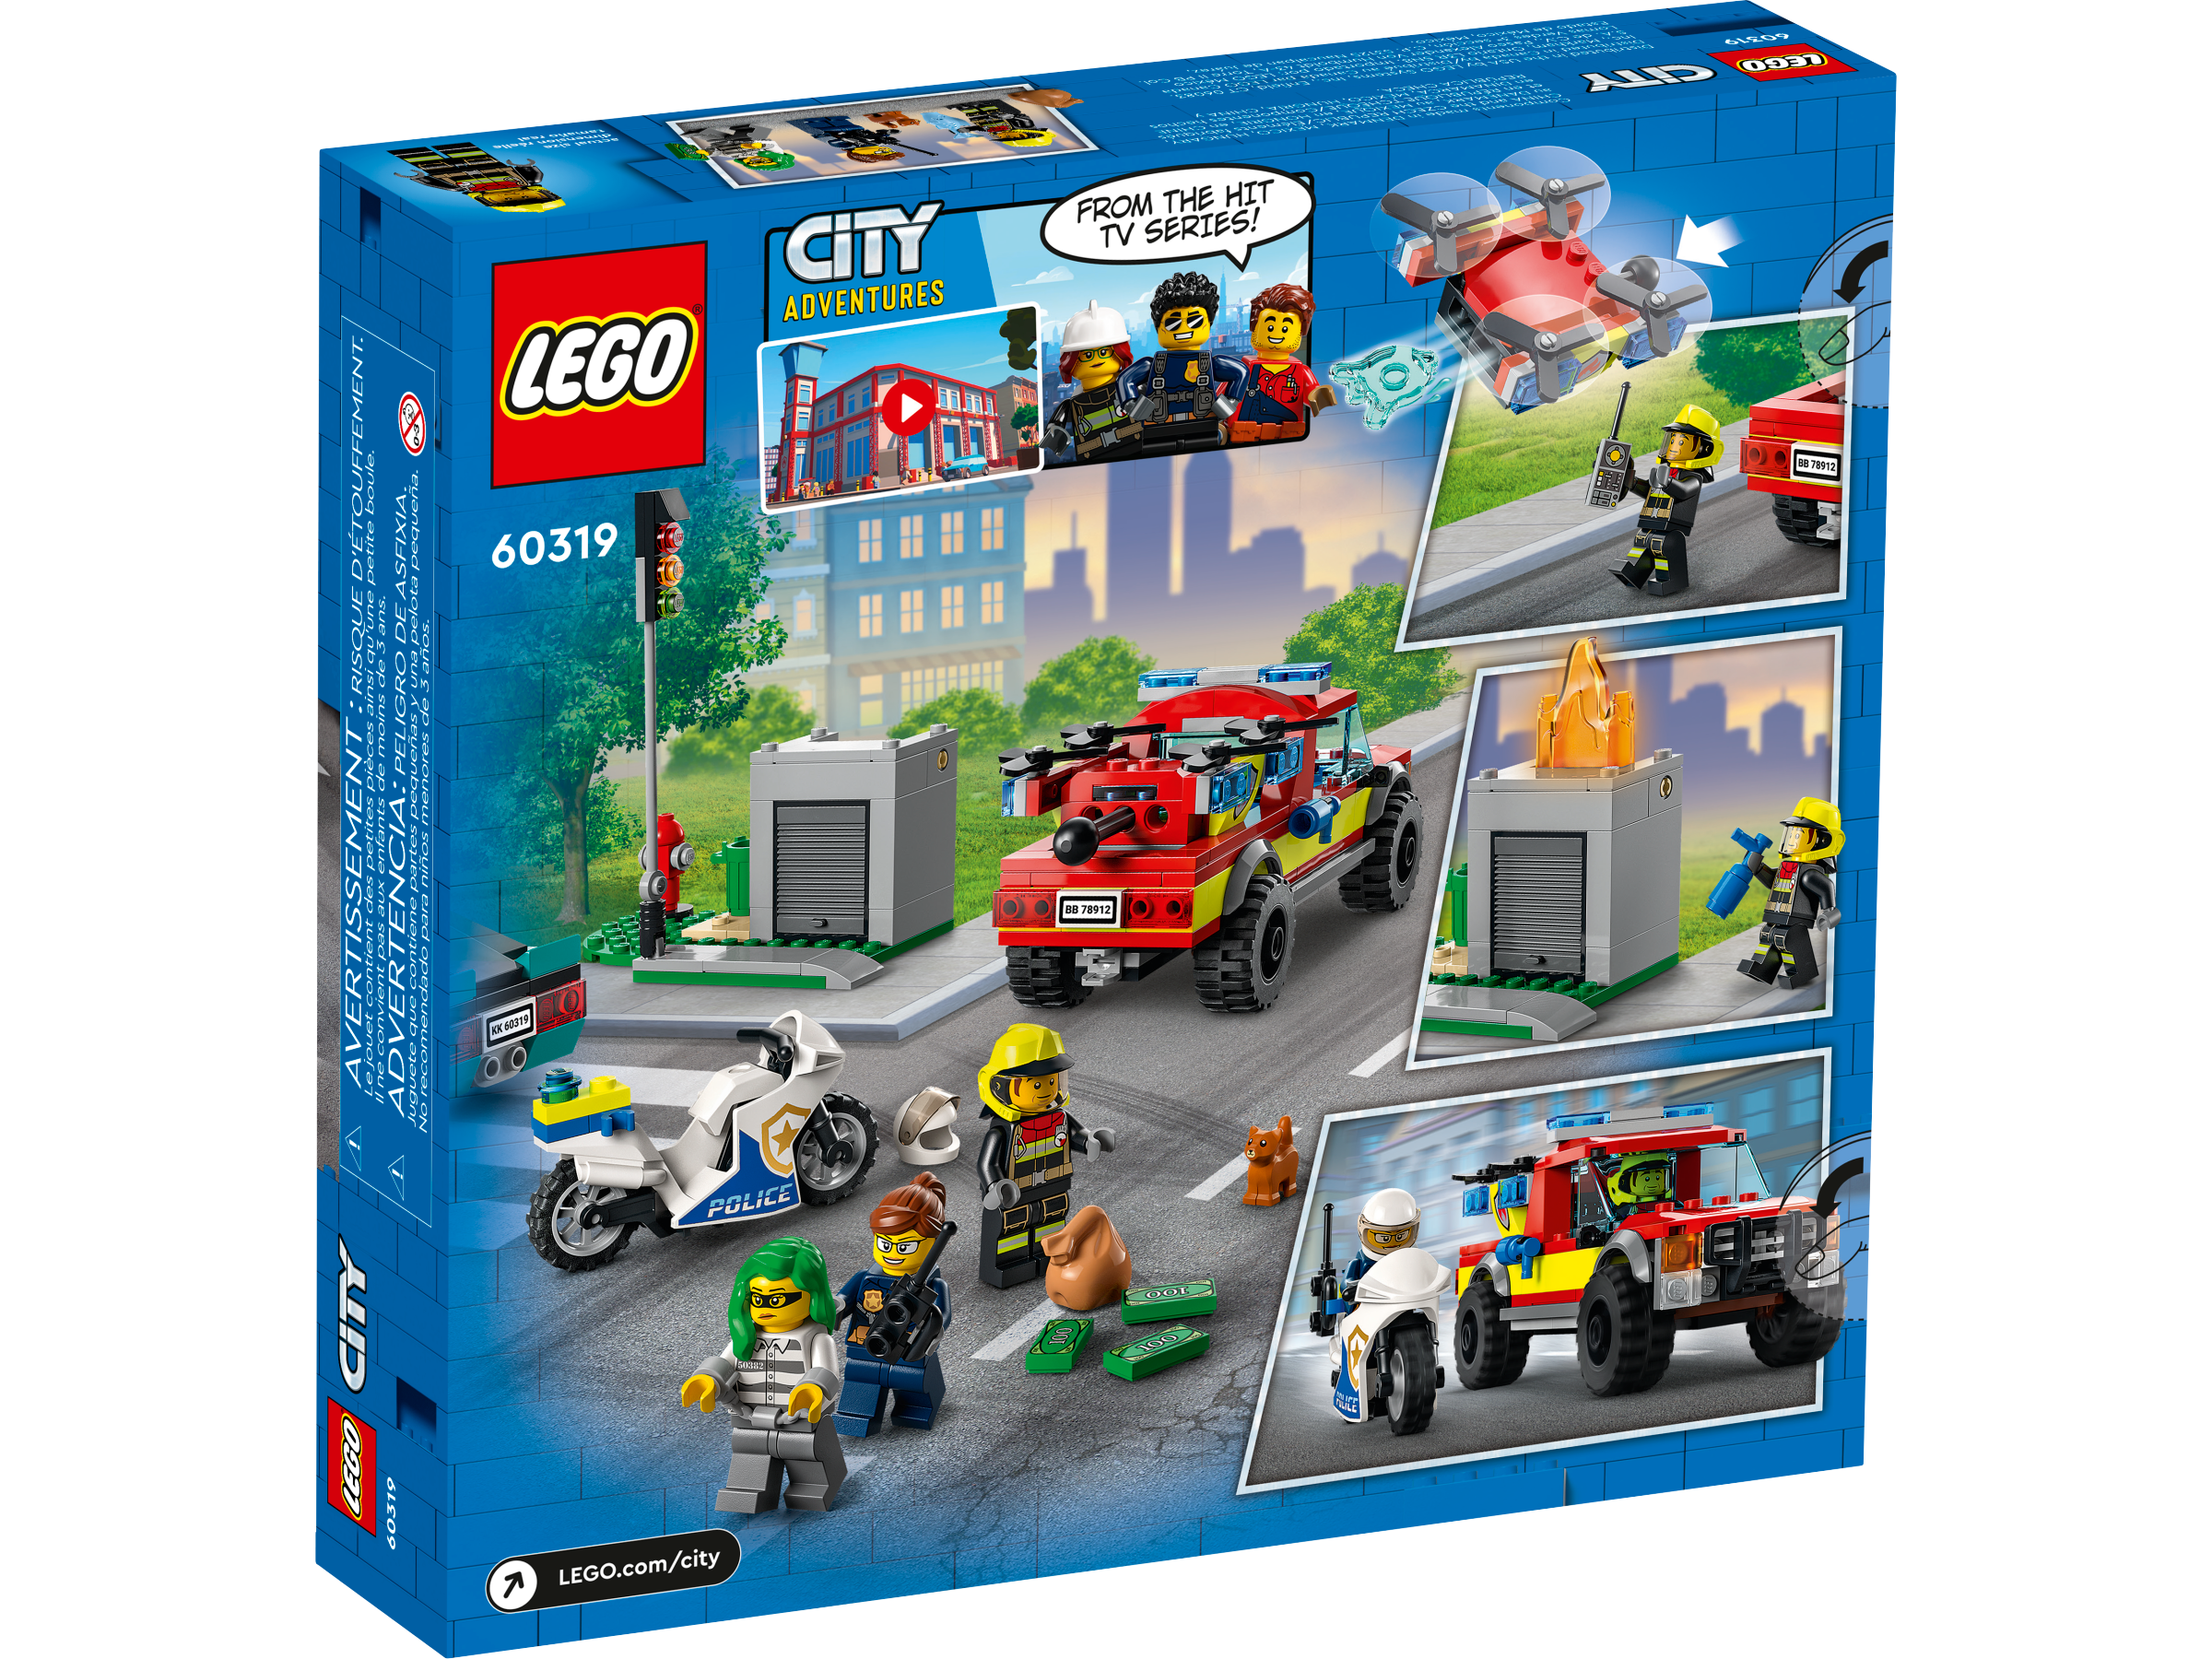 Feuer Superpack OVP Neu Lego City Aufkleber Figur 2 Hefte